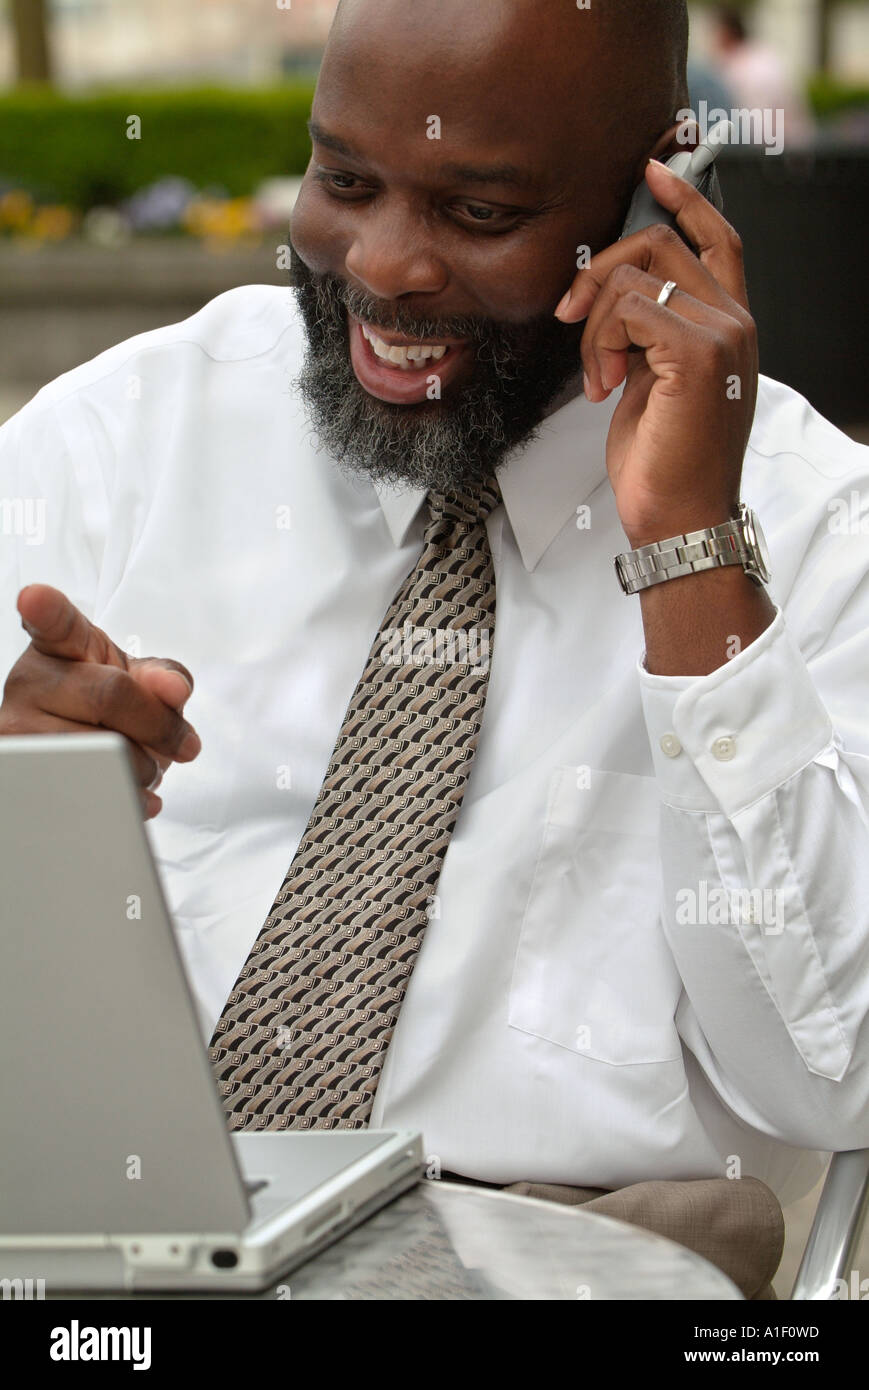 African American Uomo con laptop e parlando al cellulare Foto Stock